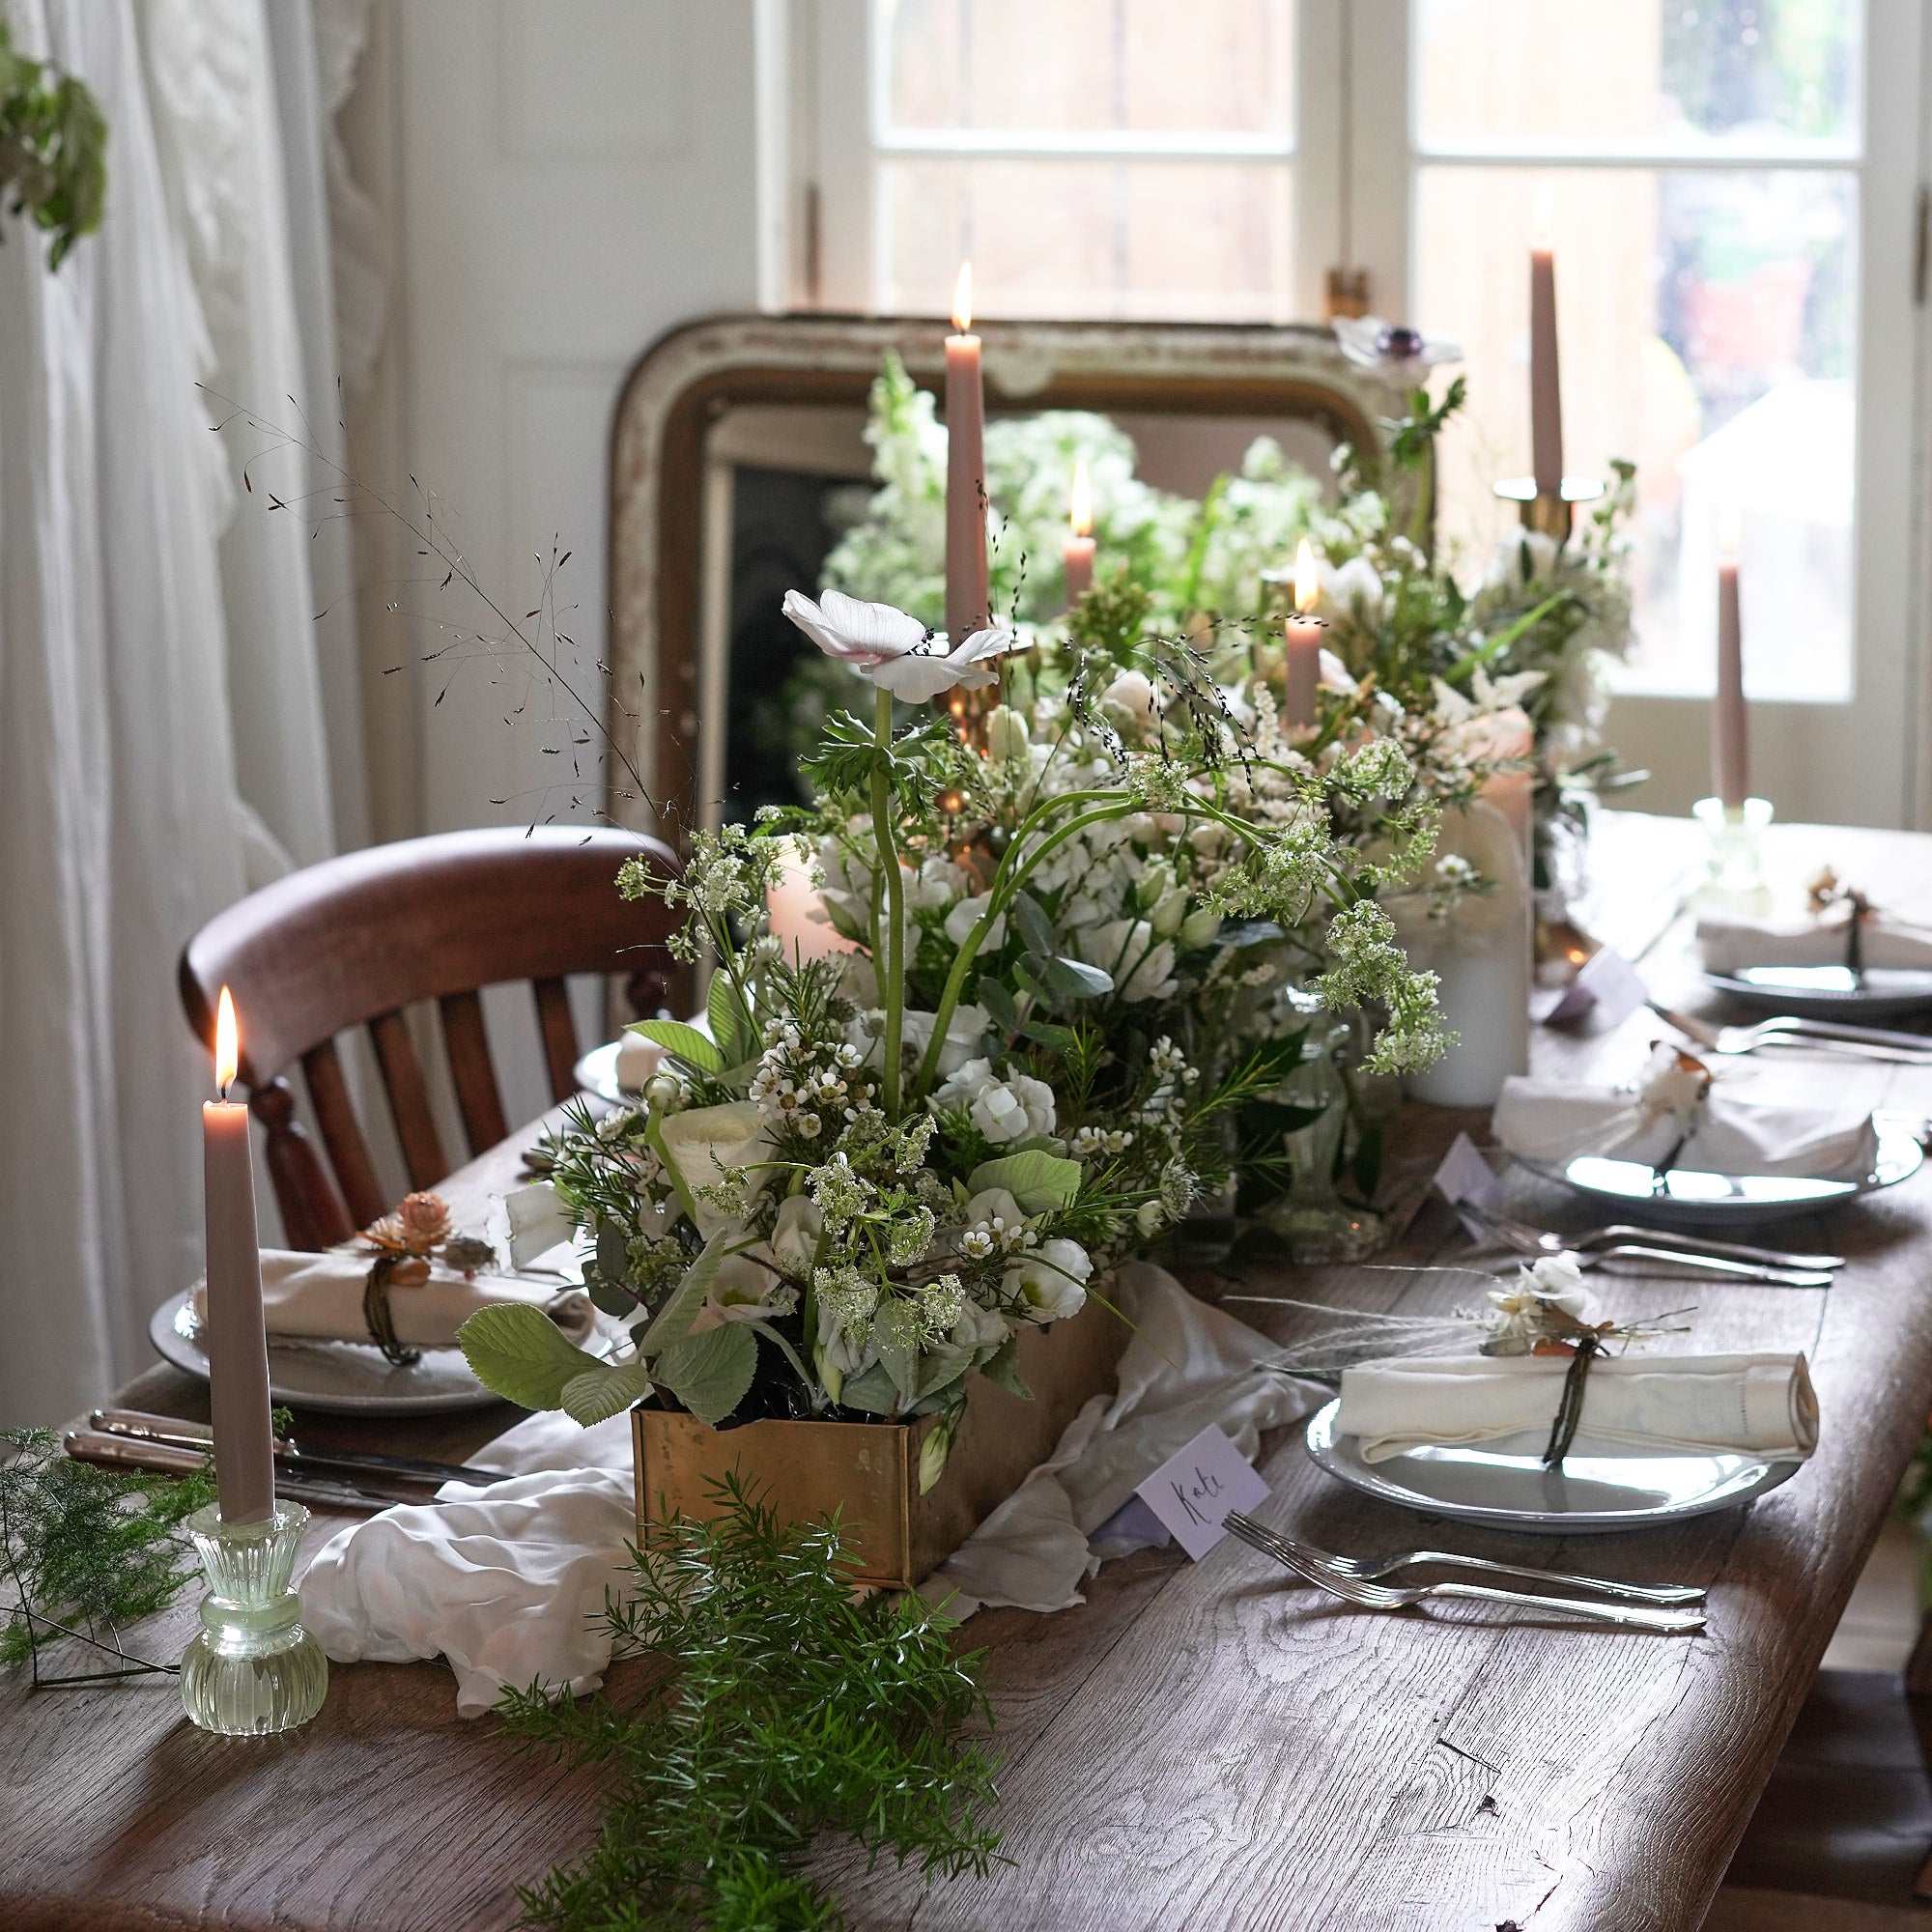 classic white wedding flowers through arrangement to decorate wedding venue by Botanique Workshop